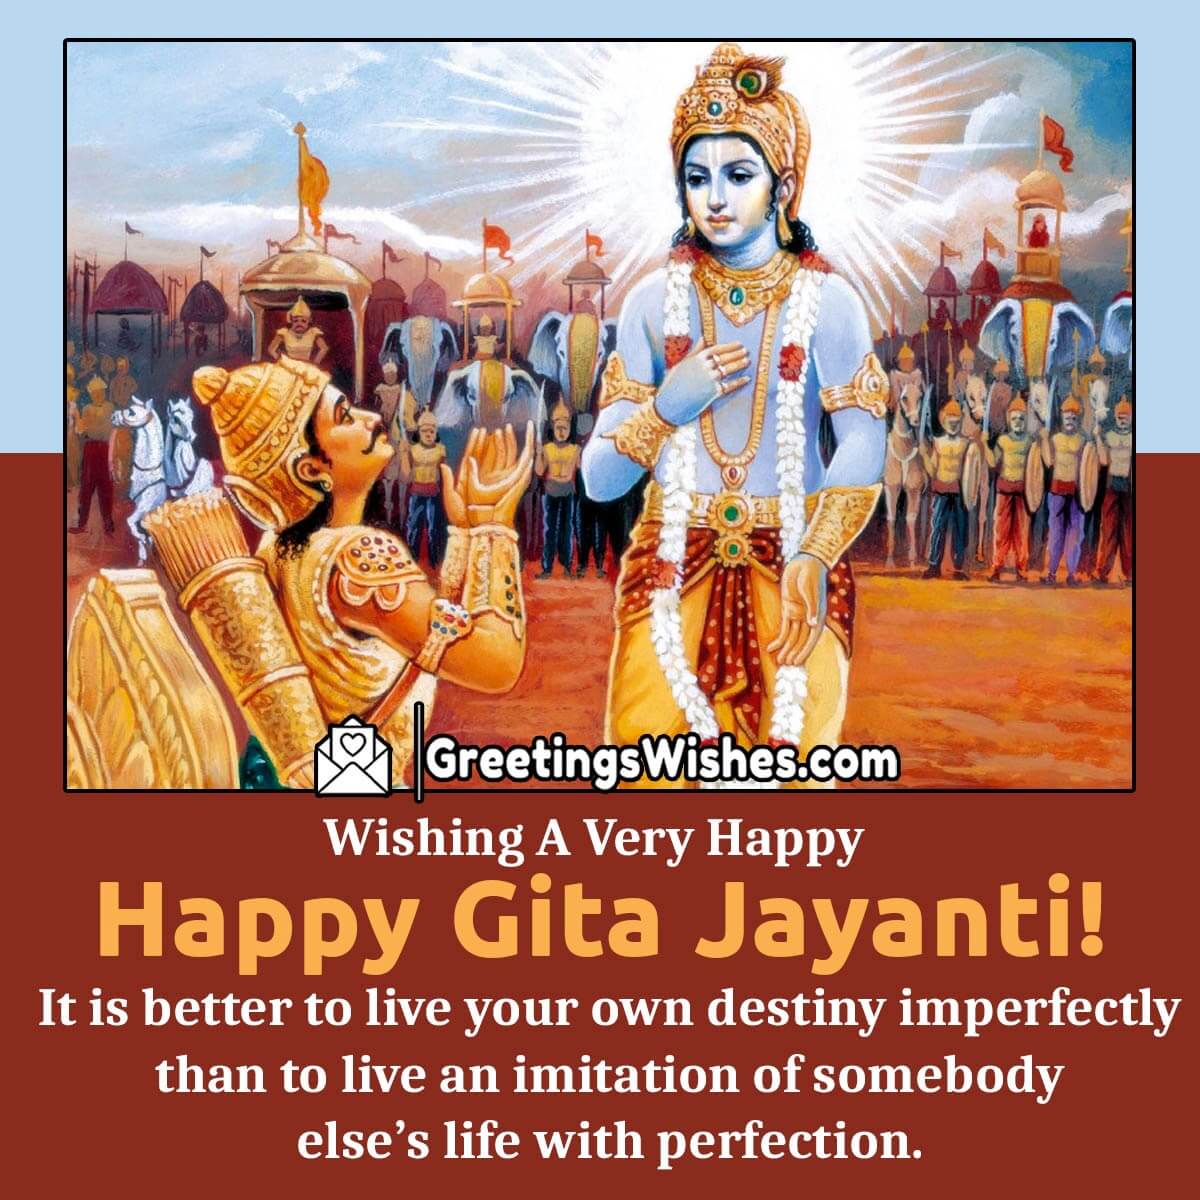 Wishing A Very Happy Gita Jayanti